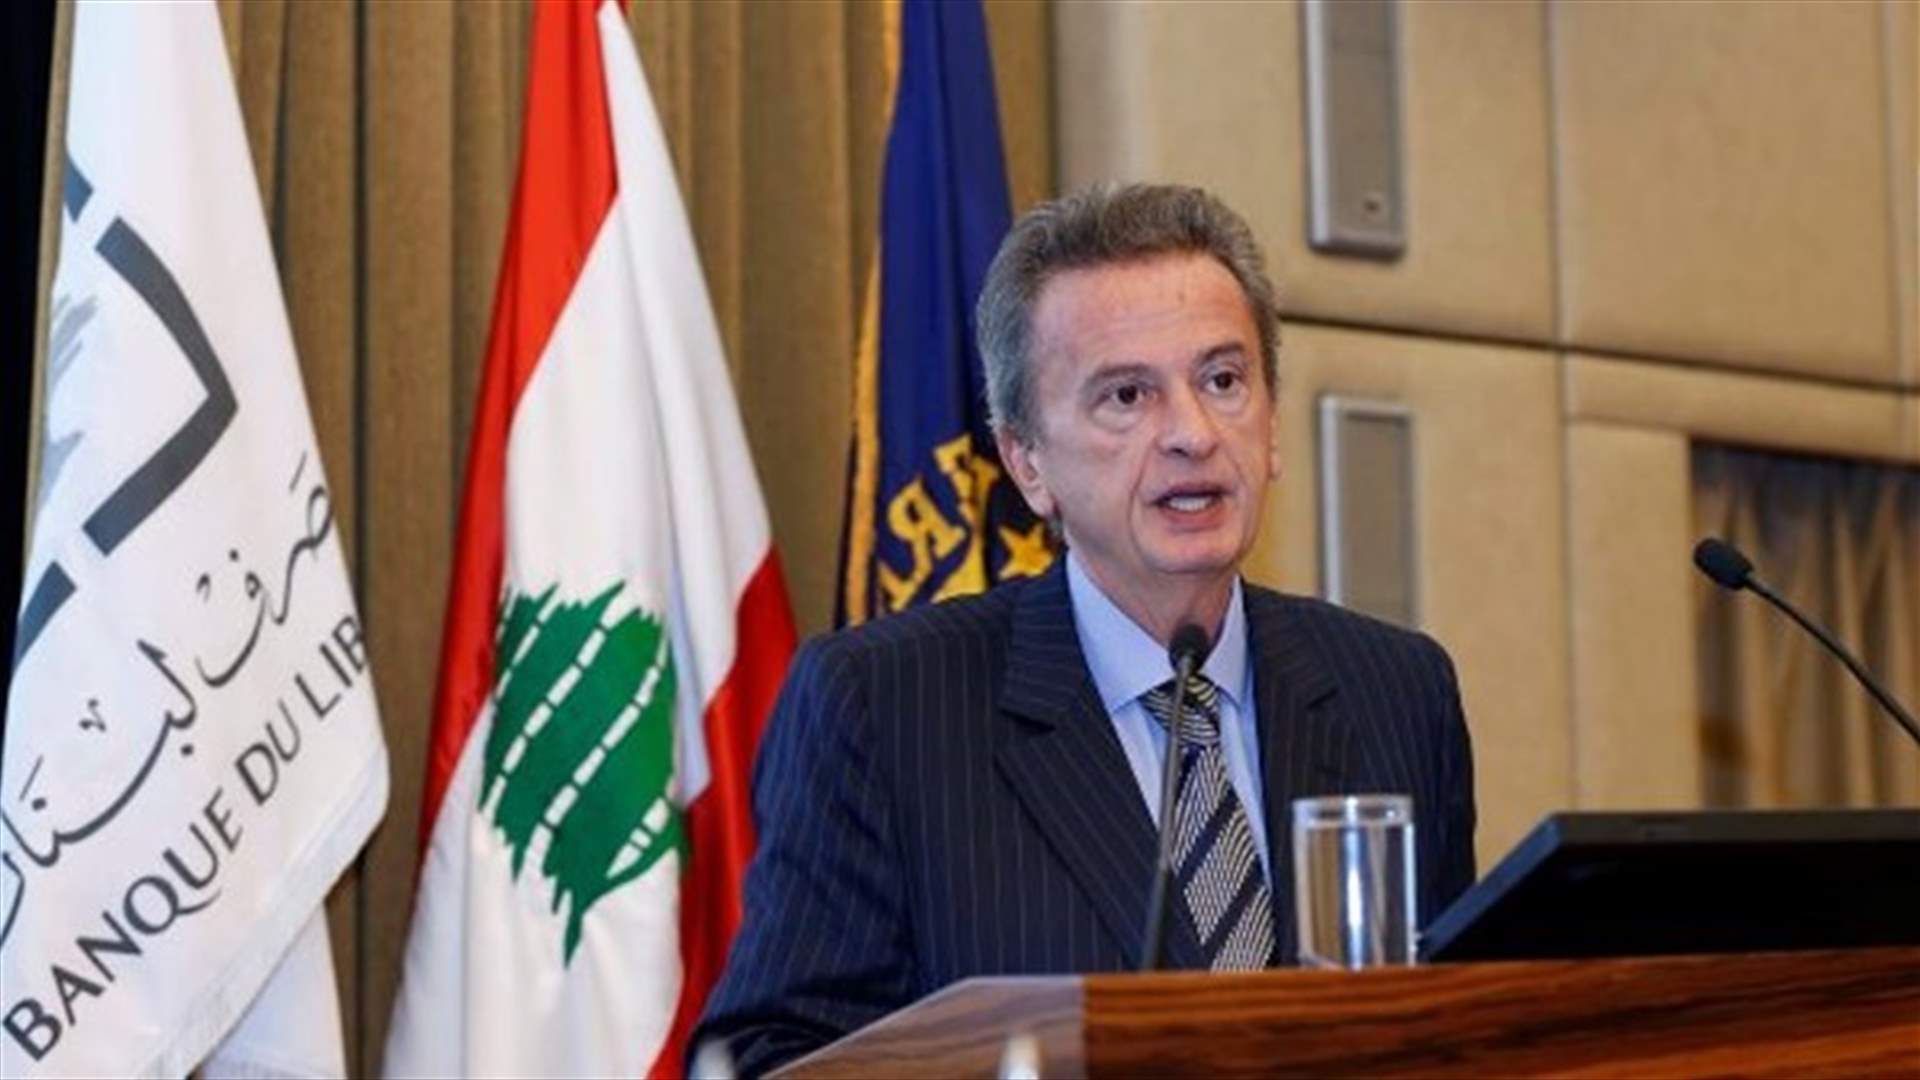 BDL Governor Salameh: Lebanon’s economy garners people’s trust